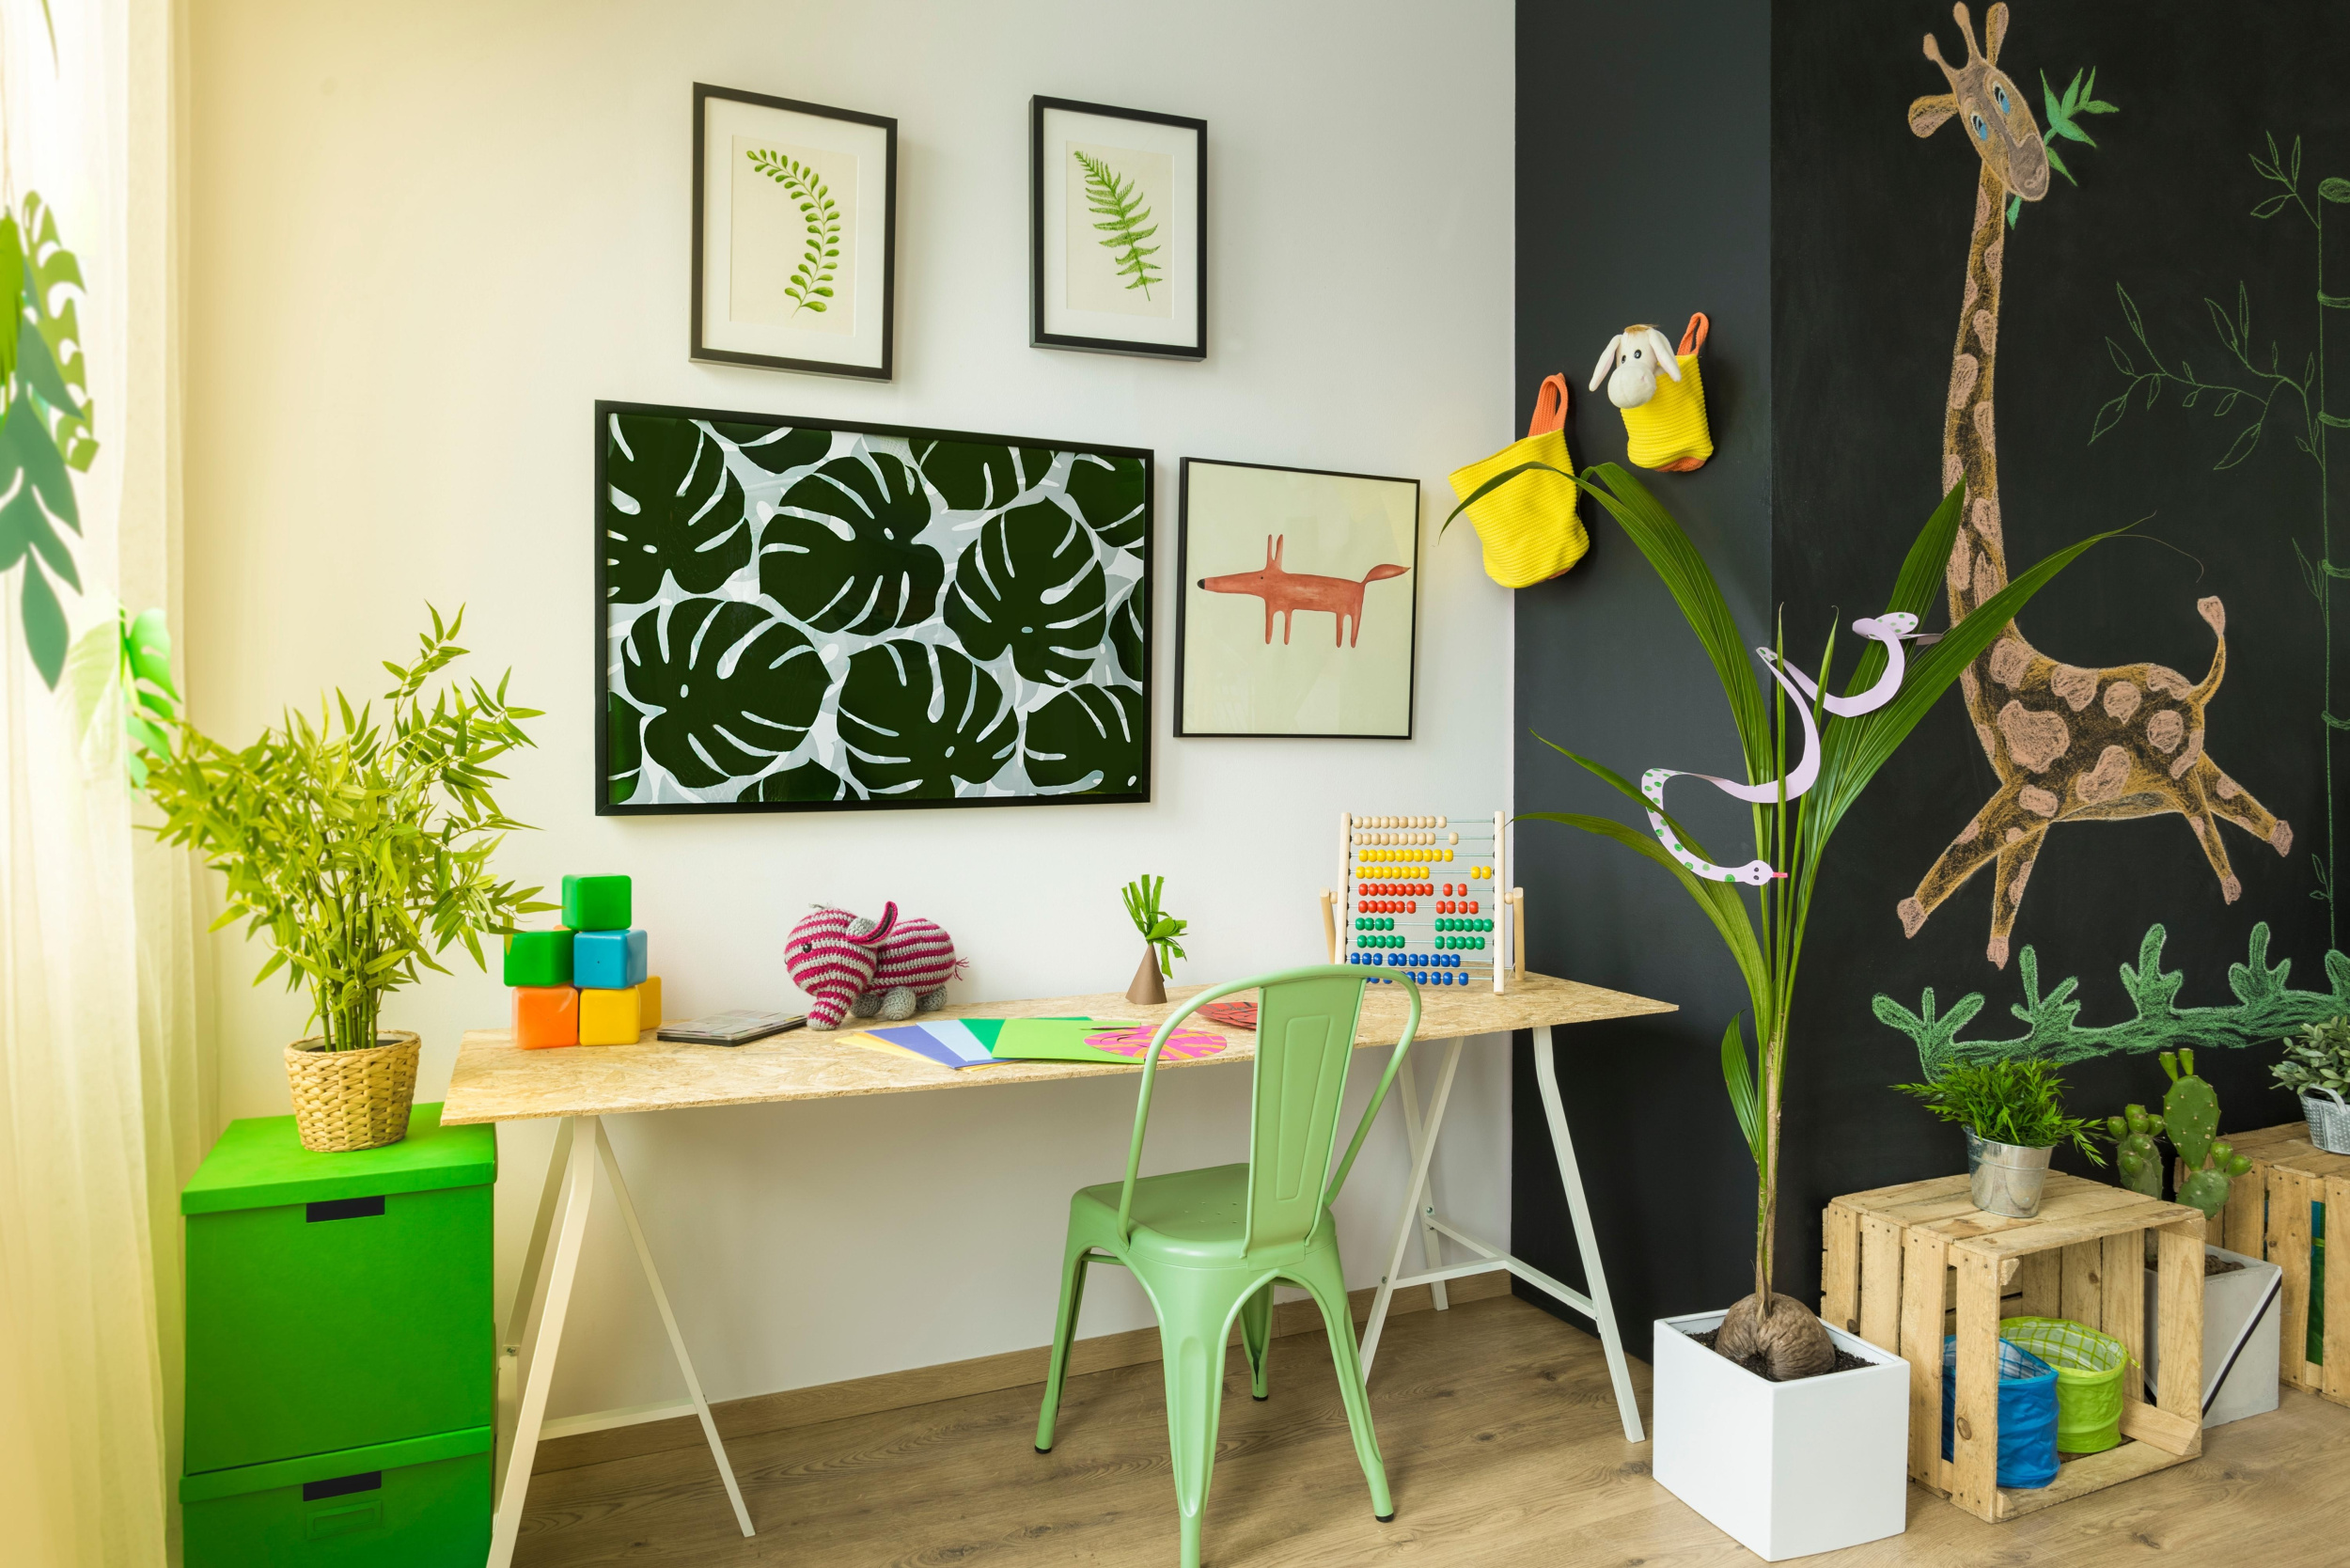 1 creative-room-children-with-green-accessories-giraffe-drawing-blackboard-wall.jpg